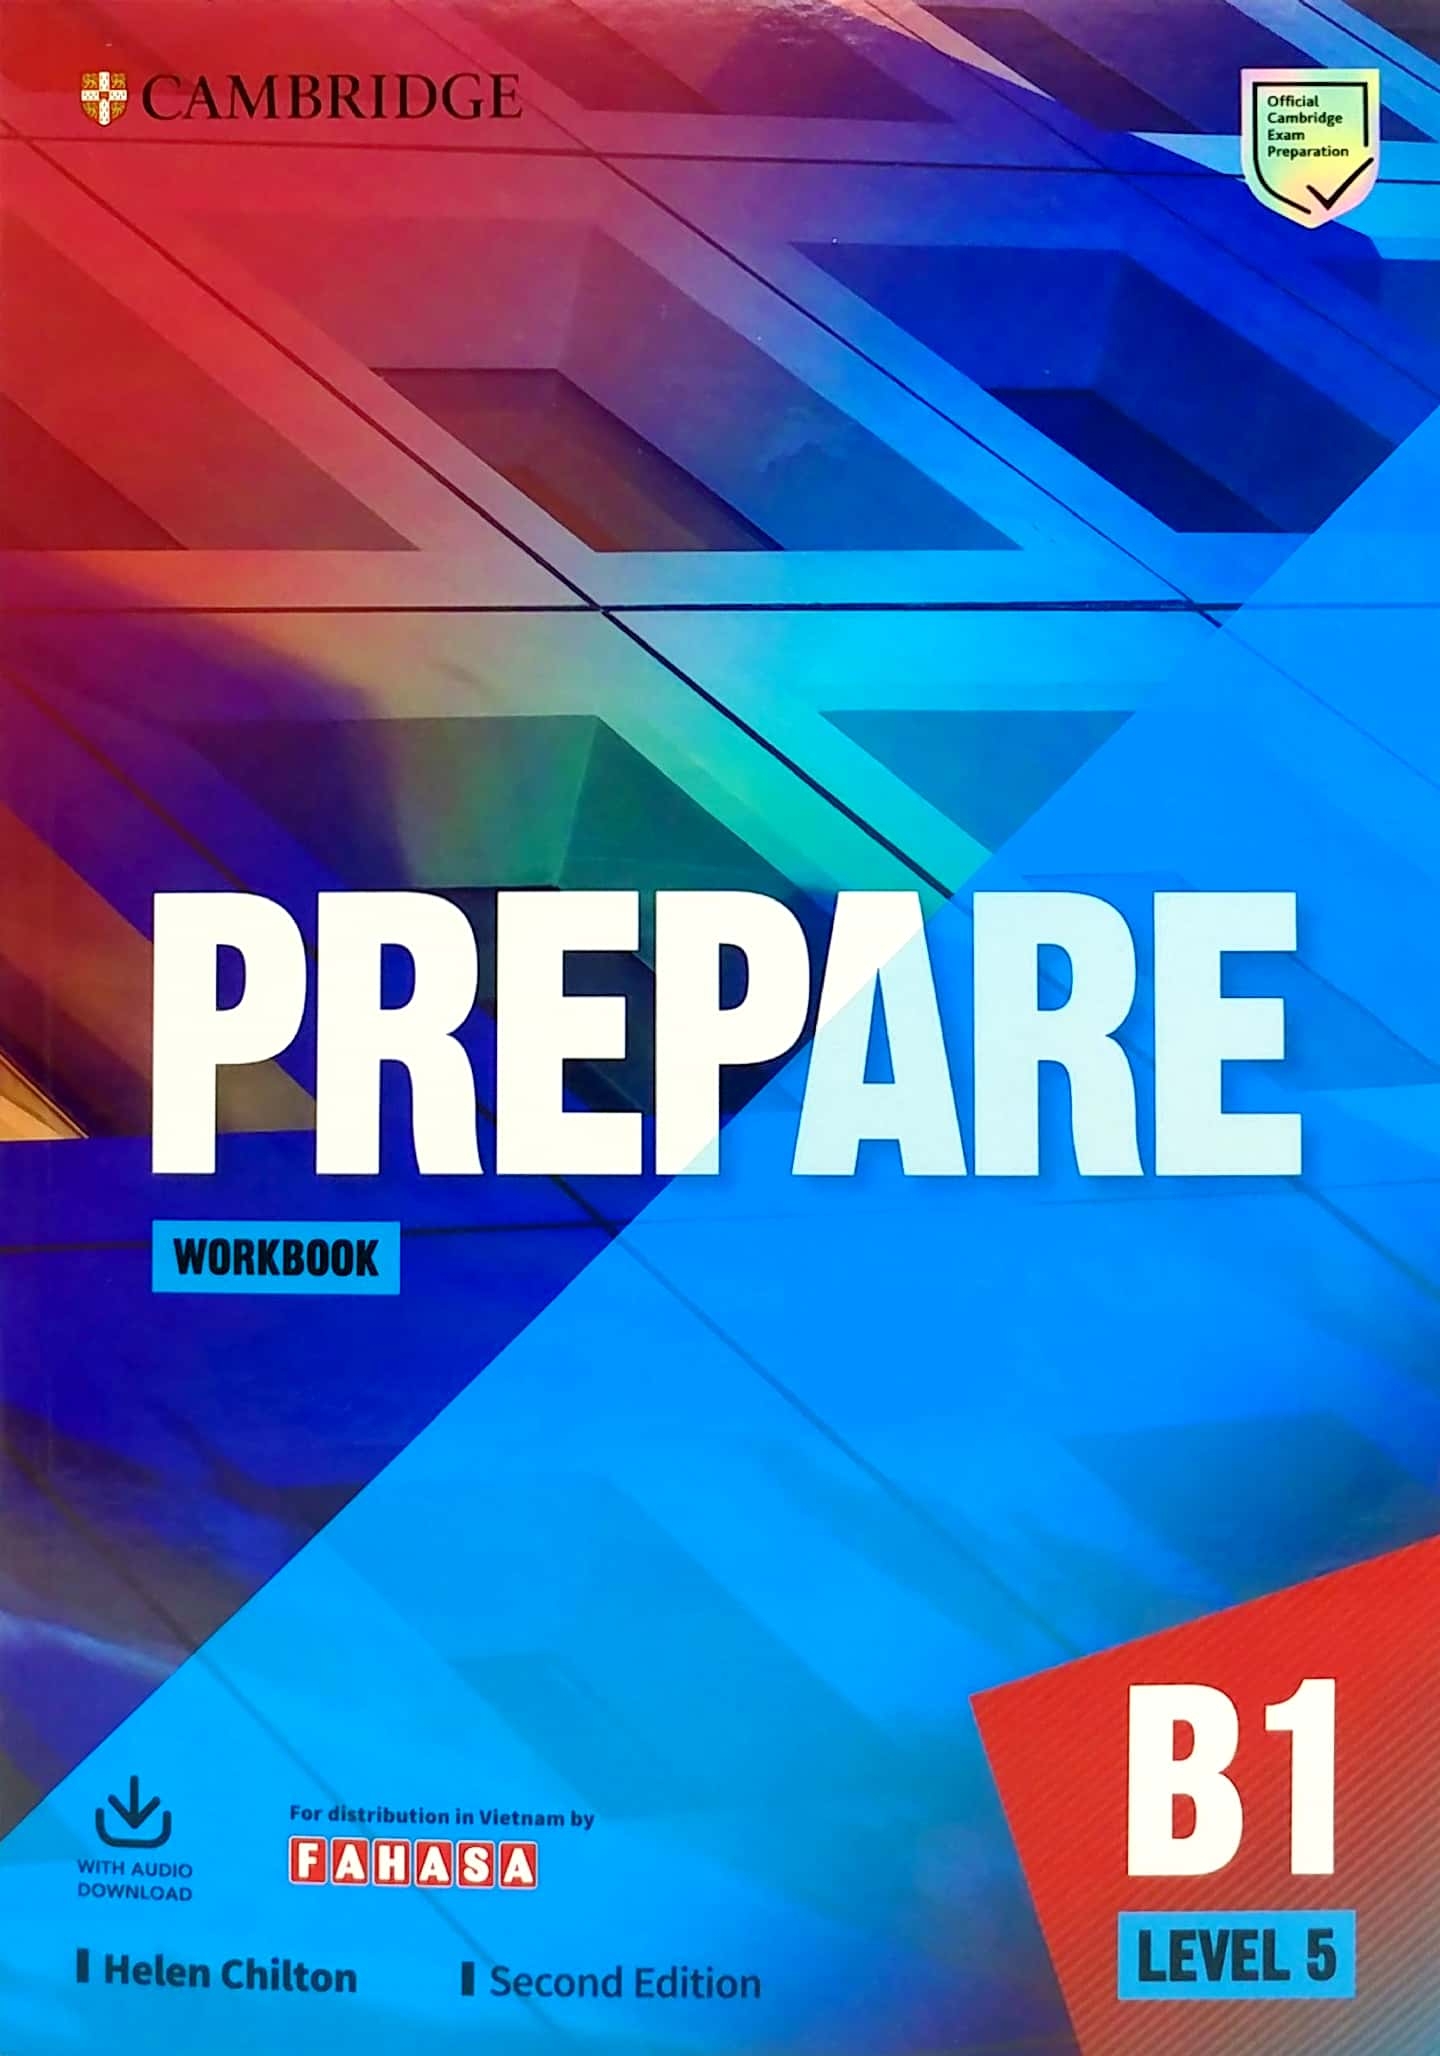 Prepare B1 Level 5 Workbook with Audio Download